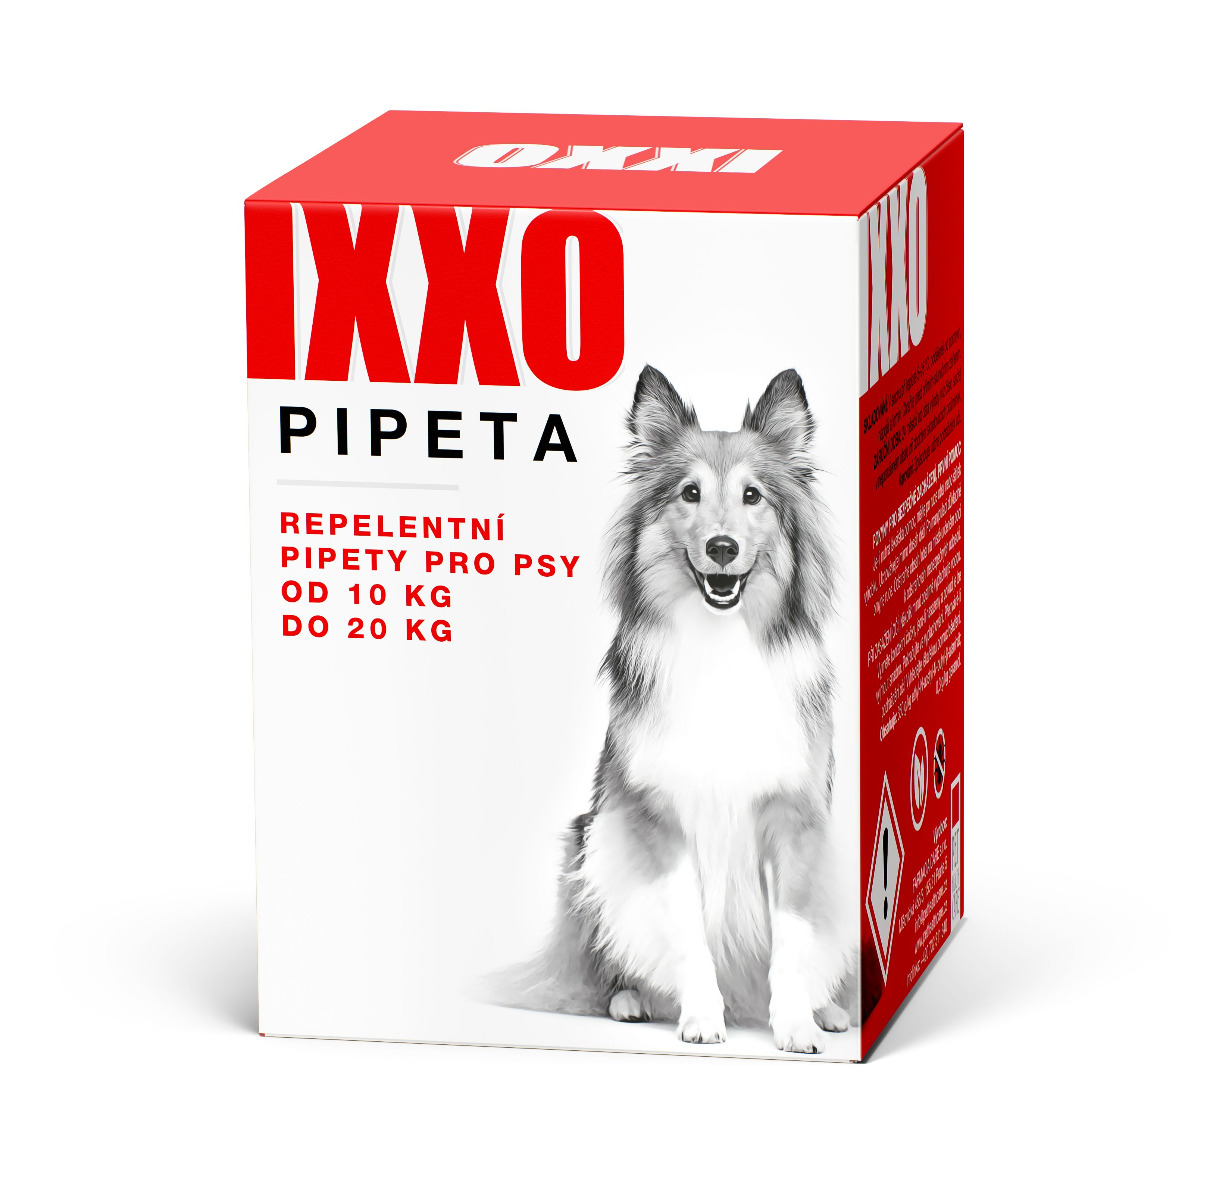 Pet health care IXXO Pipeta pro psy od 10 do 20 kg 3x10 ml Pet health care